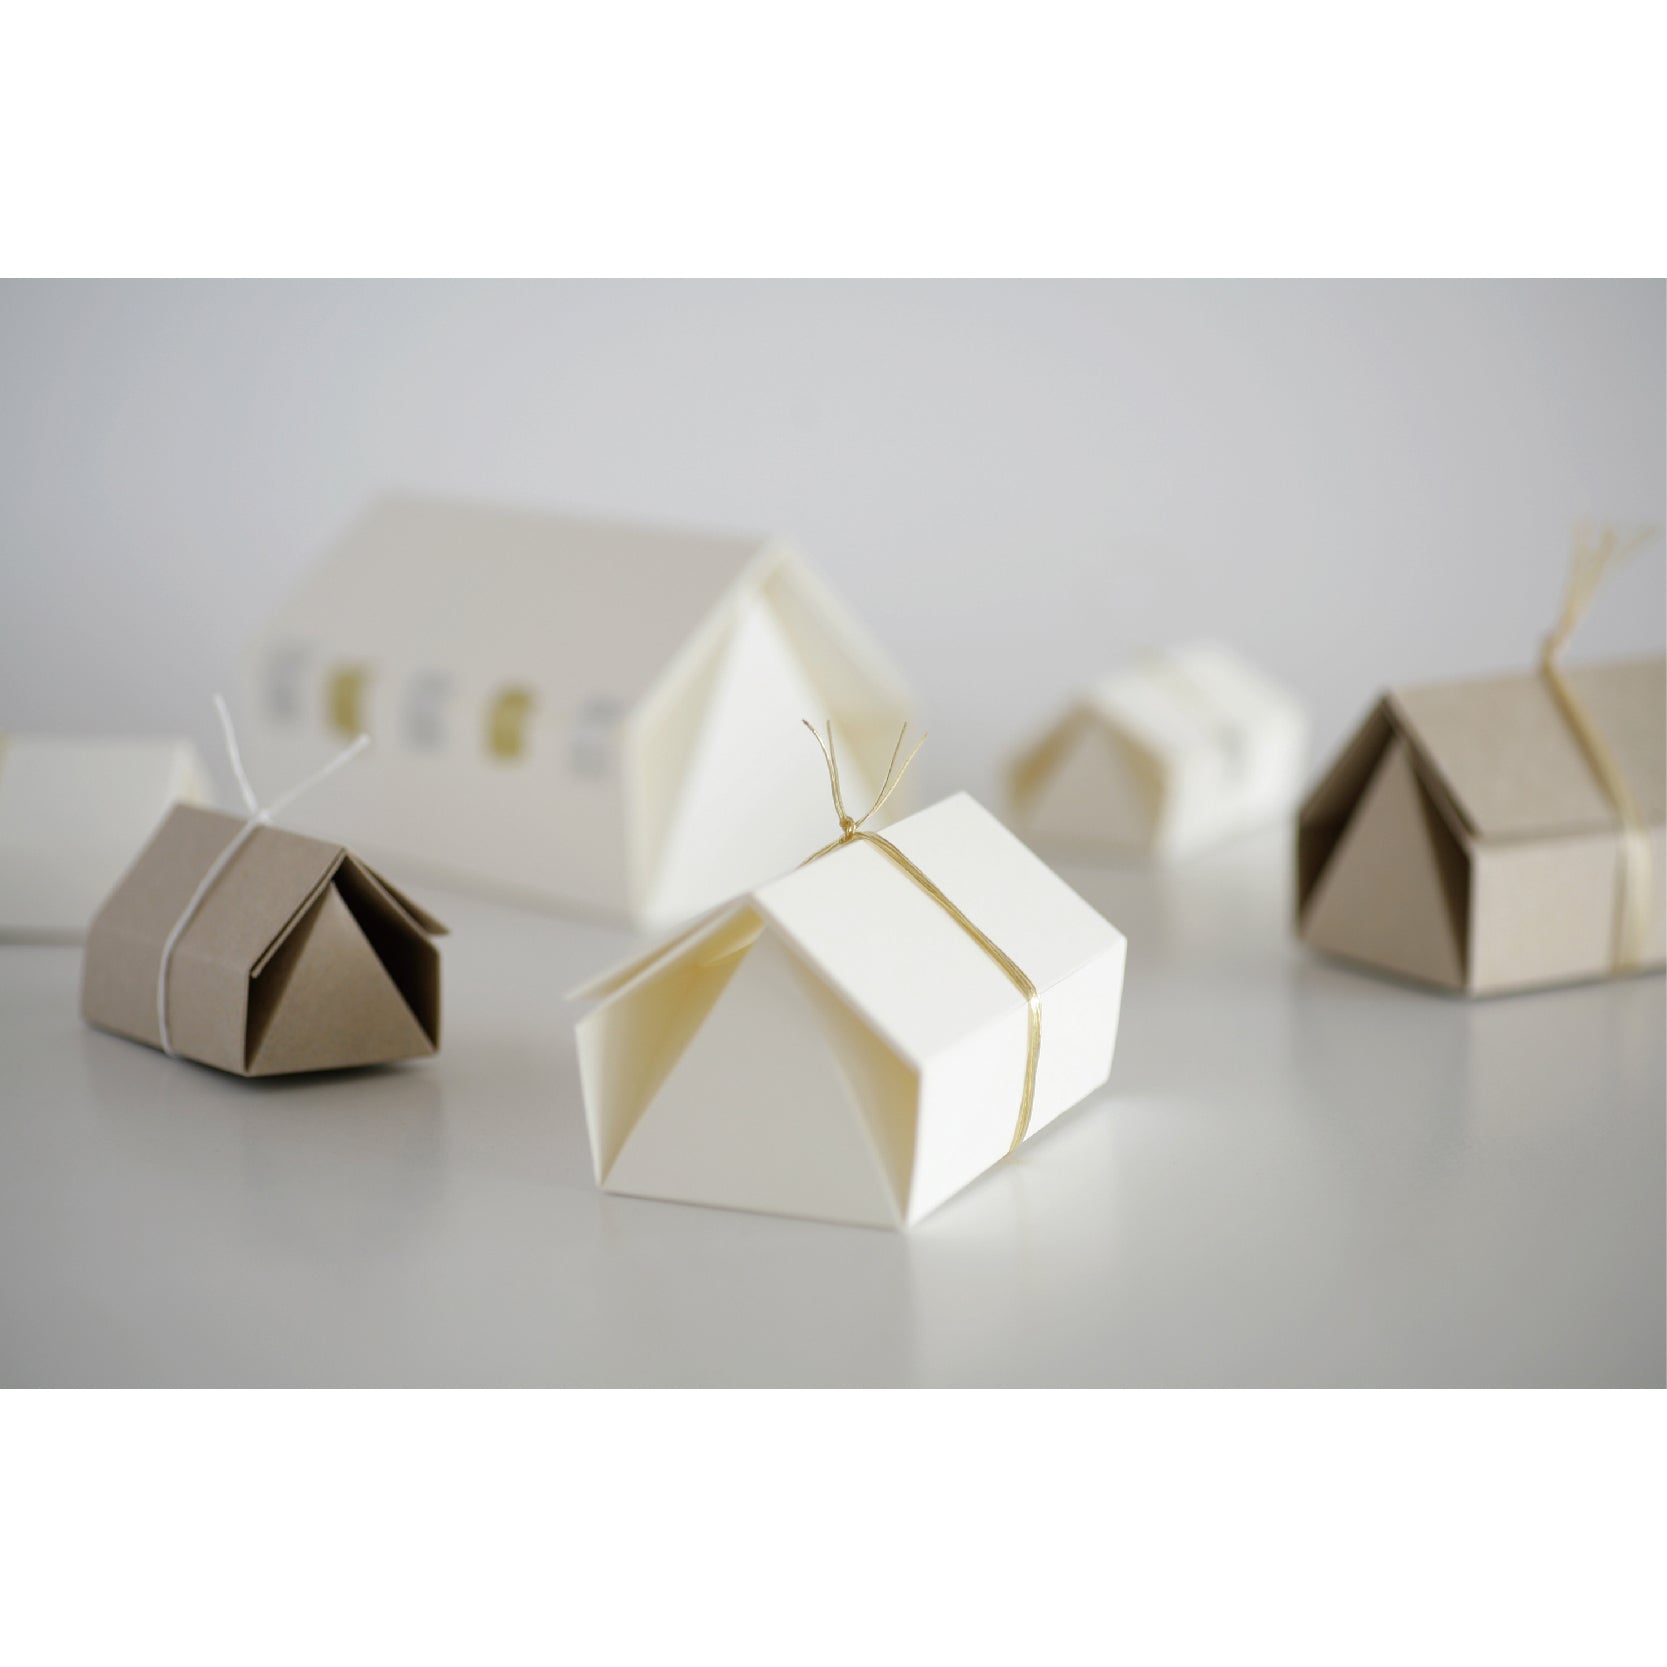 Ie Rokkaku - Hexagonal House -